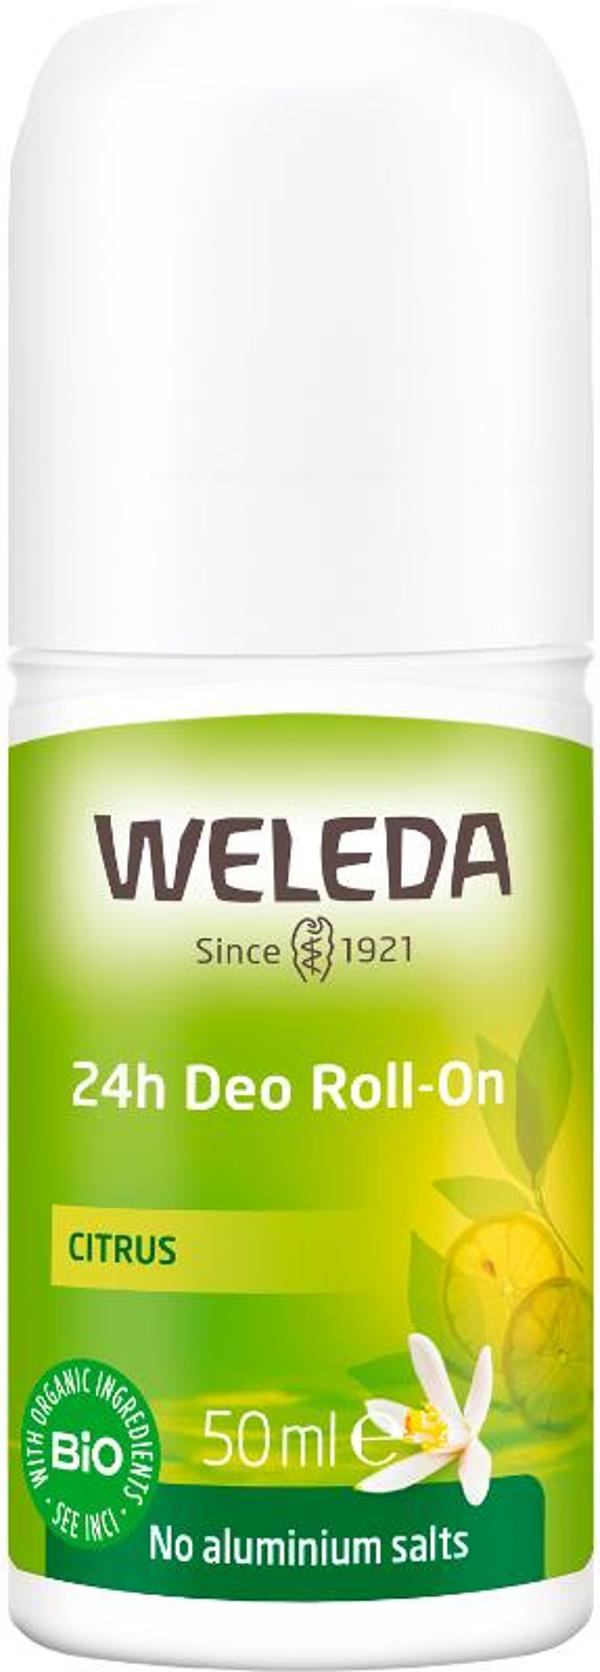 Produktfoto zu Citrus 24h Deo Roll-On 50 ml Weleda